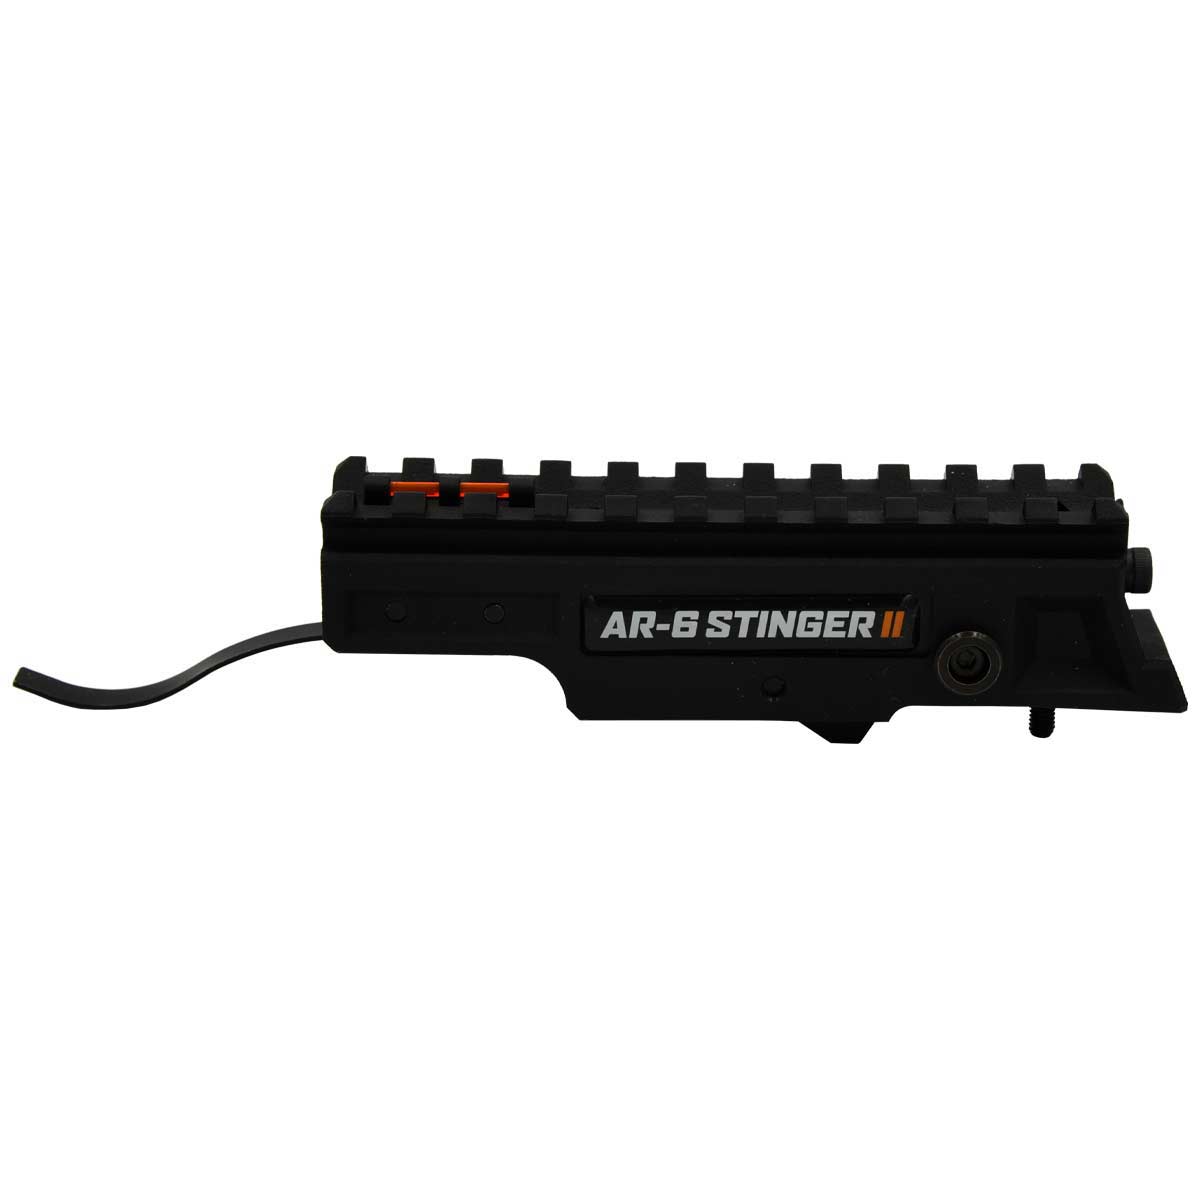 Système de tir individuel AR-6 Stinger II – Steambow GmbH